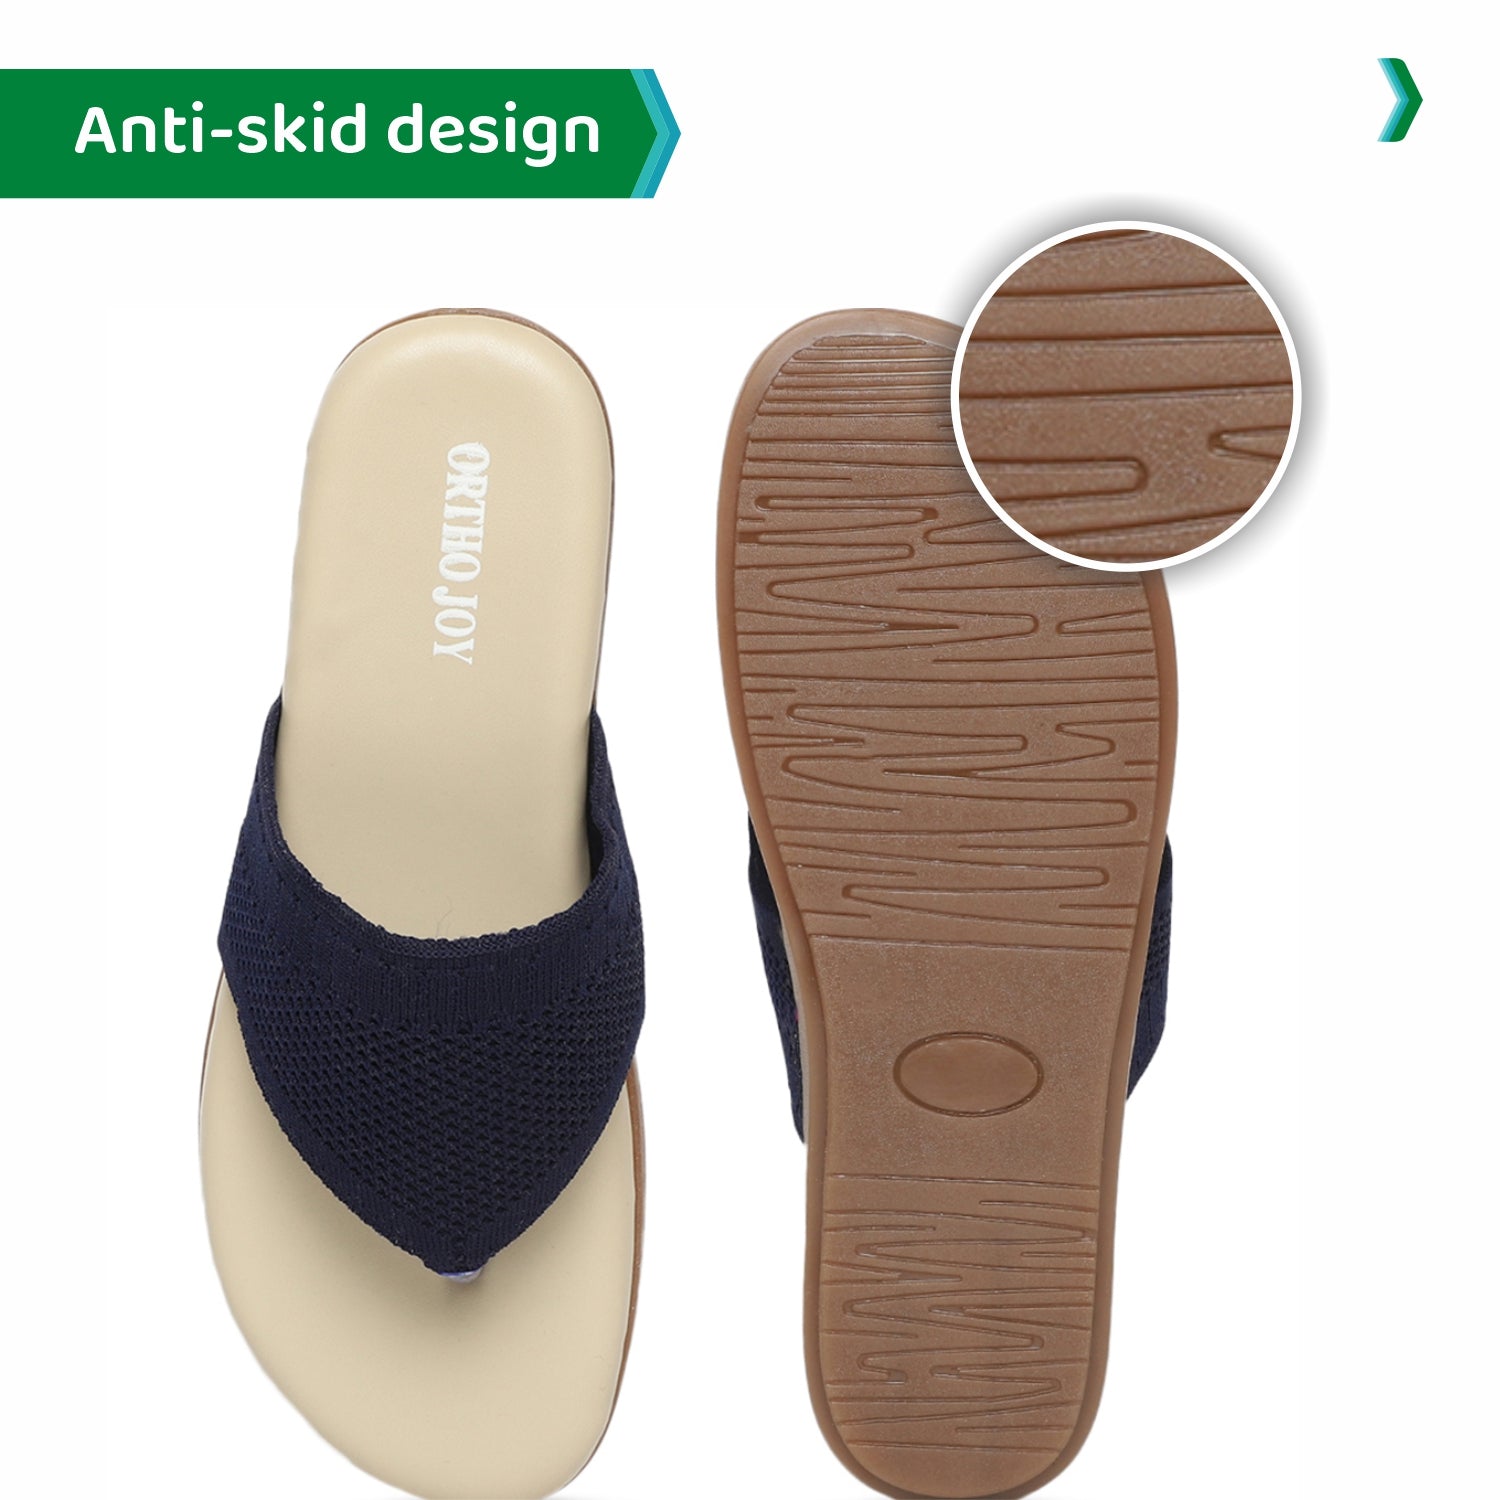 Naturalizer | Shoes | Naturalizer Tan Leather Super Comfort Sandals 65 M  New No Tag | Poshmark